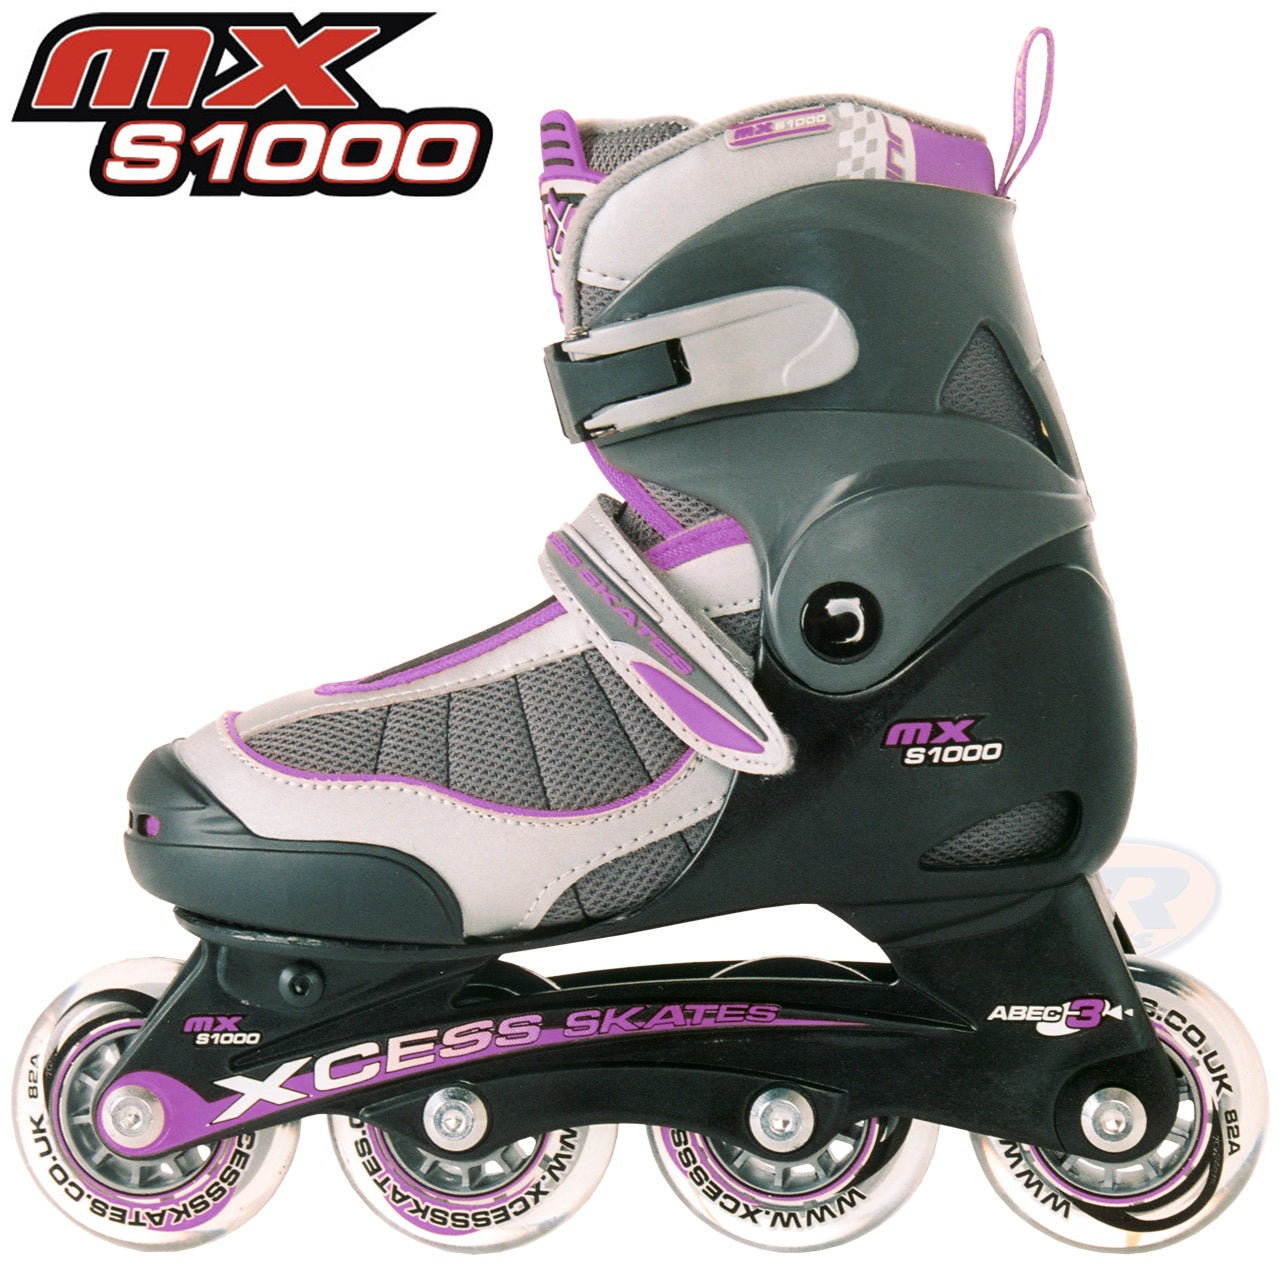 Xcess MX S1000 Adjustable In-Line Skates Lilac - Momma Trucker Skates